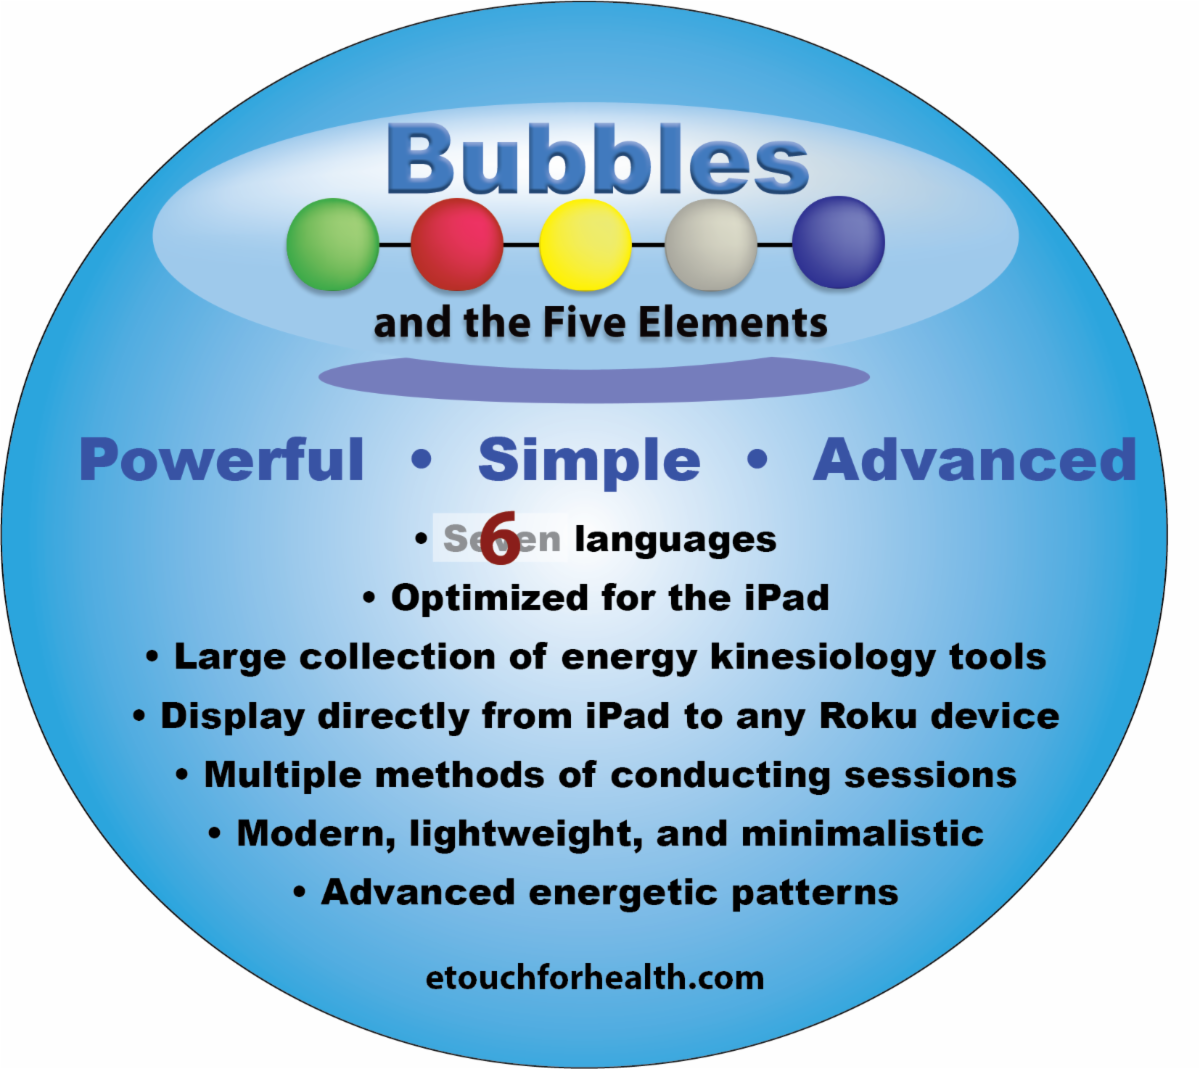 Bubbles’ list of features